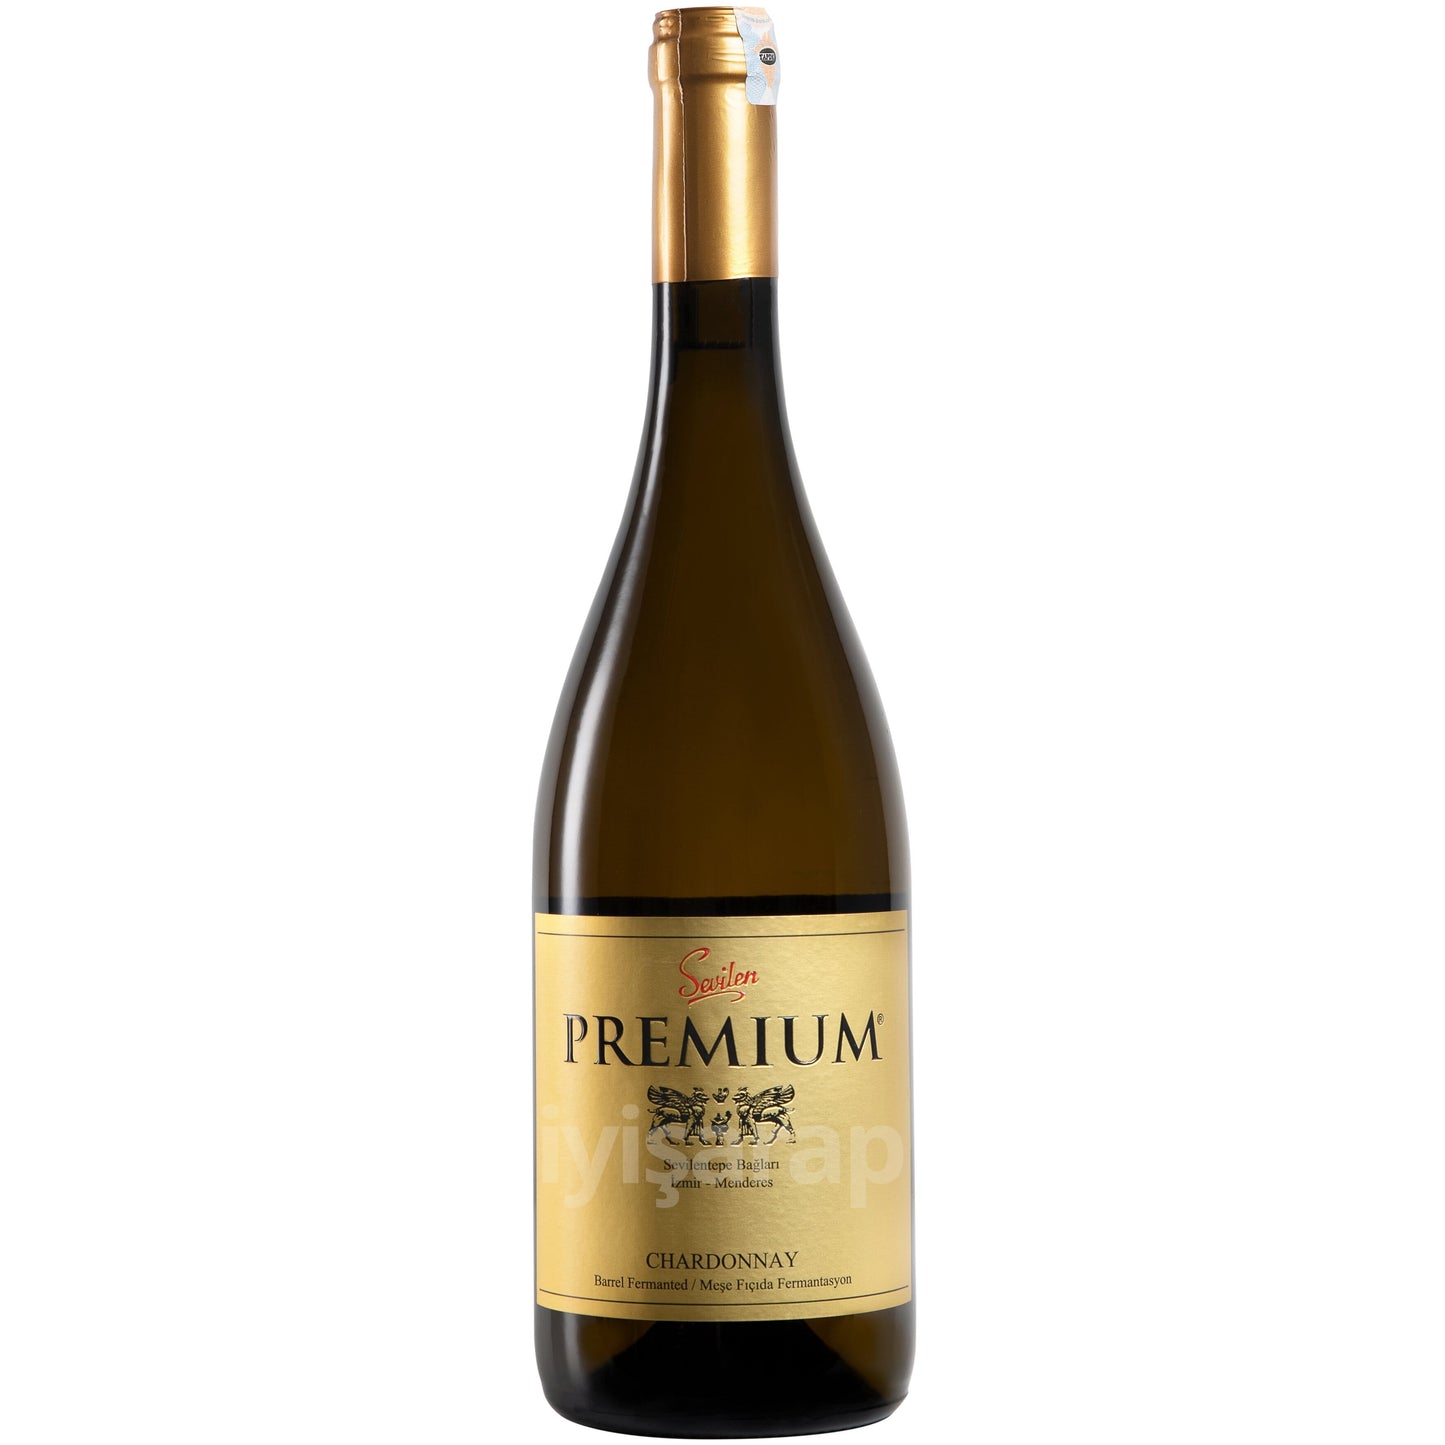 Sevilen Premium Chardonnay